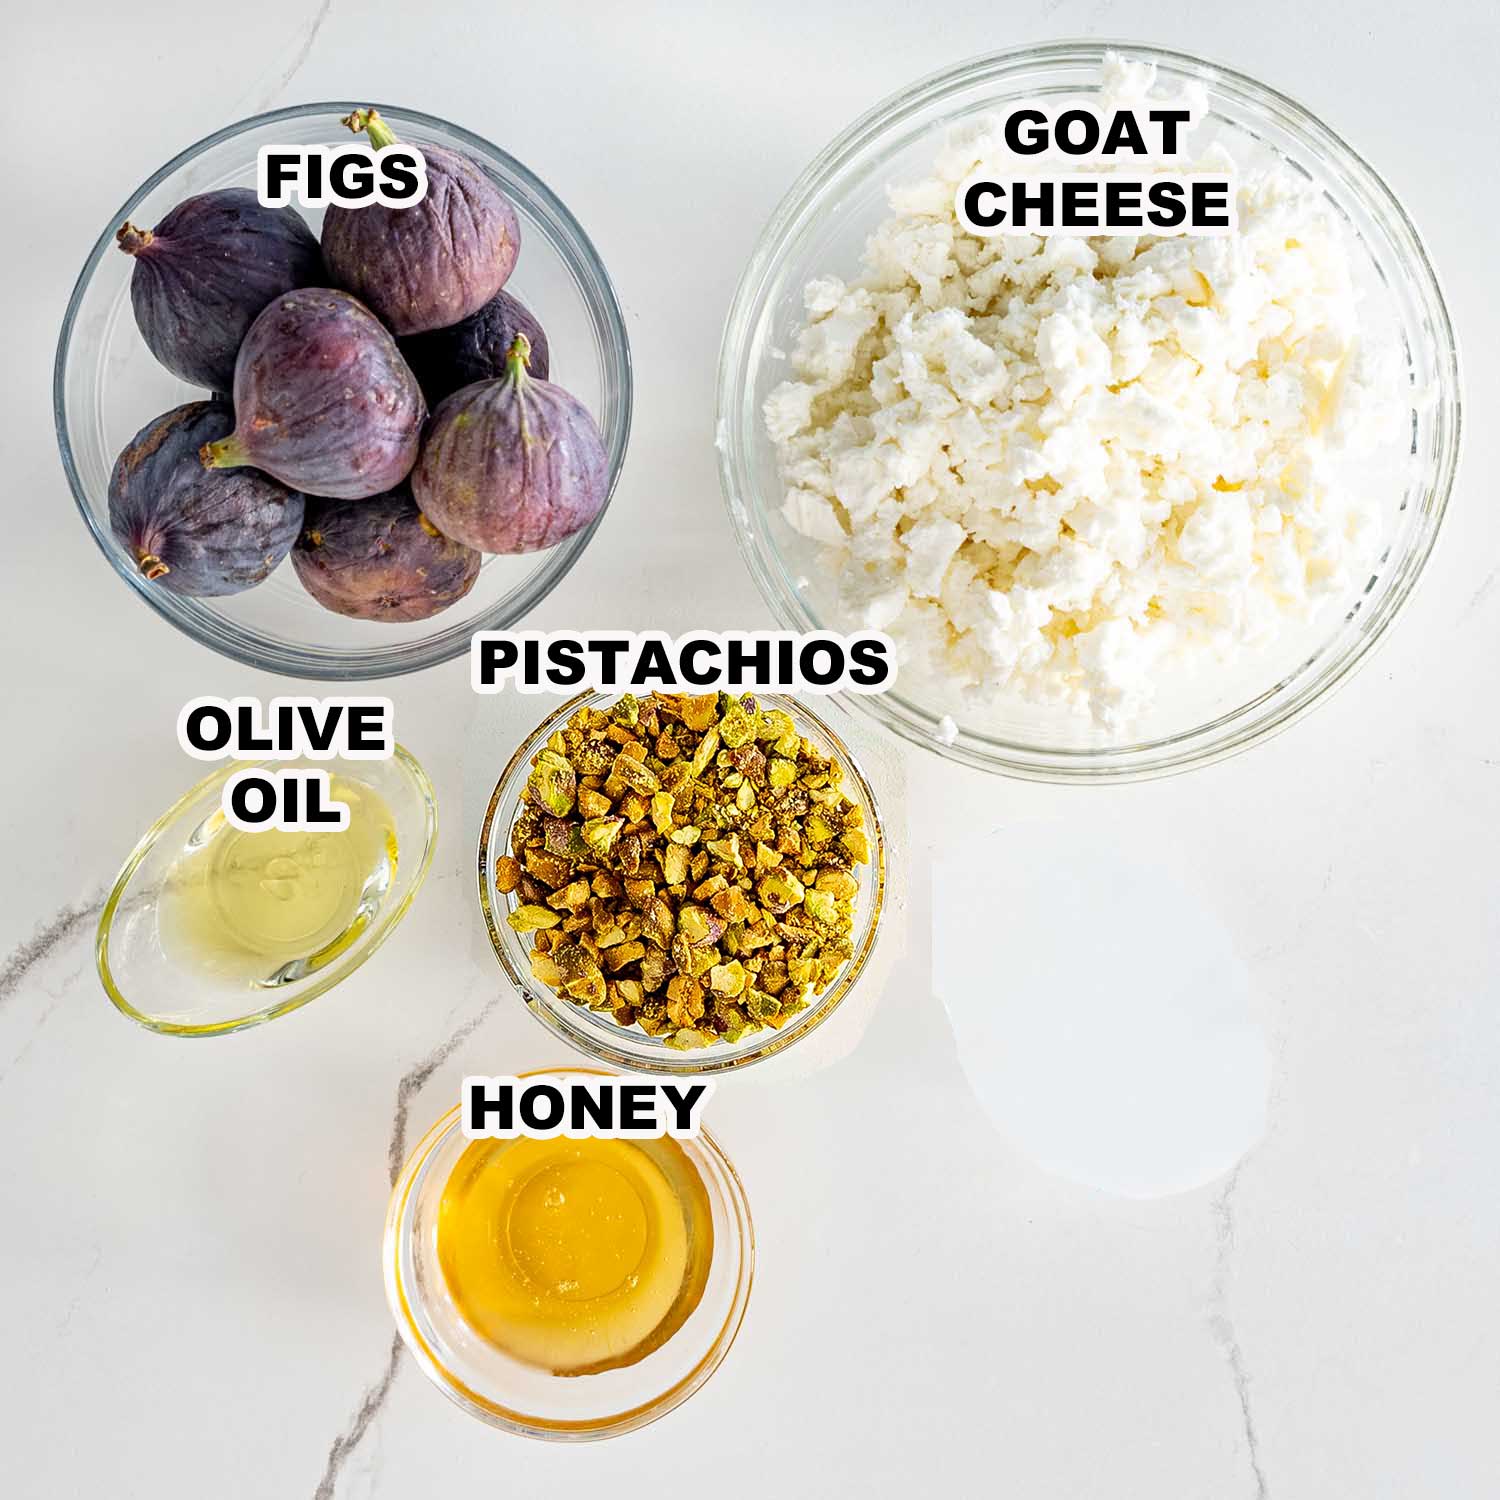 ingredients needed to make fig tart.